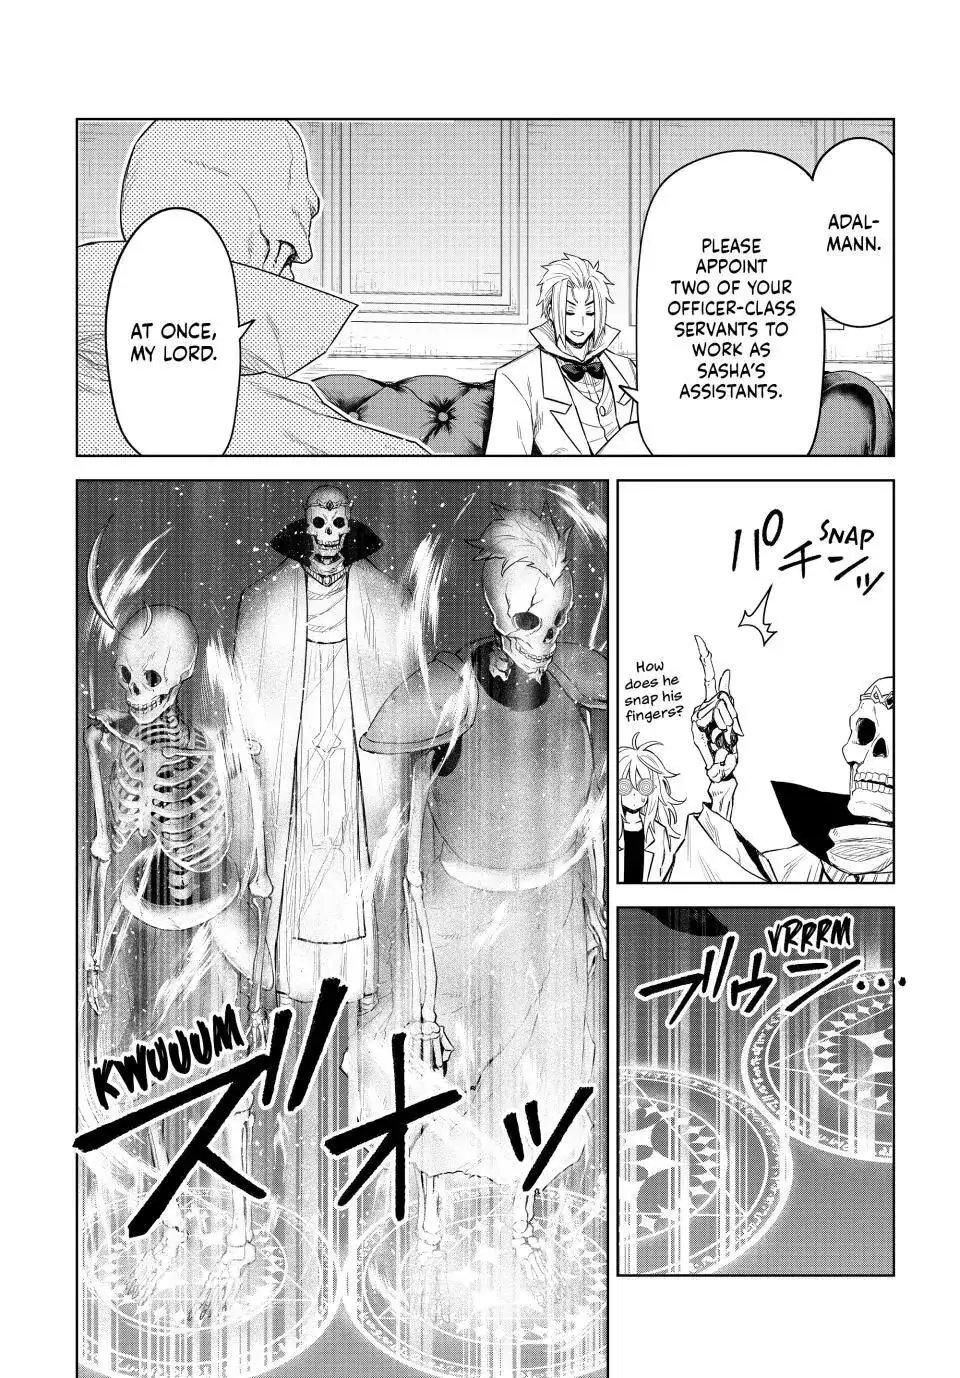 Tensei Shitara Slime Datta Ken: Clayman Revenge - 24 page 10-9cbaa6e6